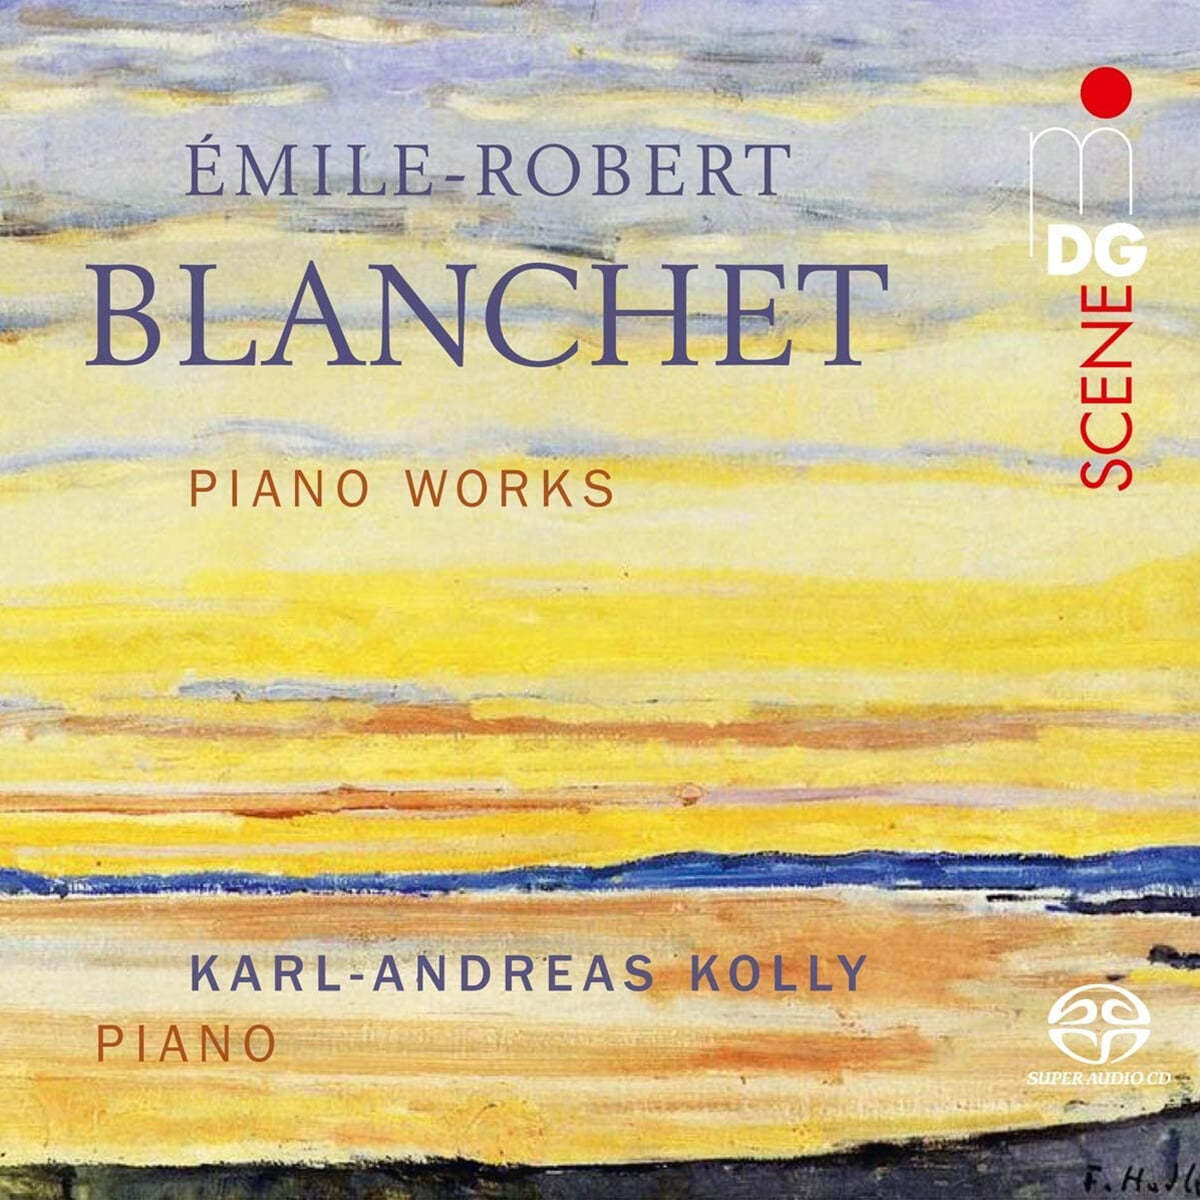 Karl-Andreas Kolly 에밀 로베르트 블랑쉐: 피아노 작품 모음집 (Emile-Robert Blanchet: Piano Works) 